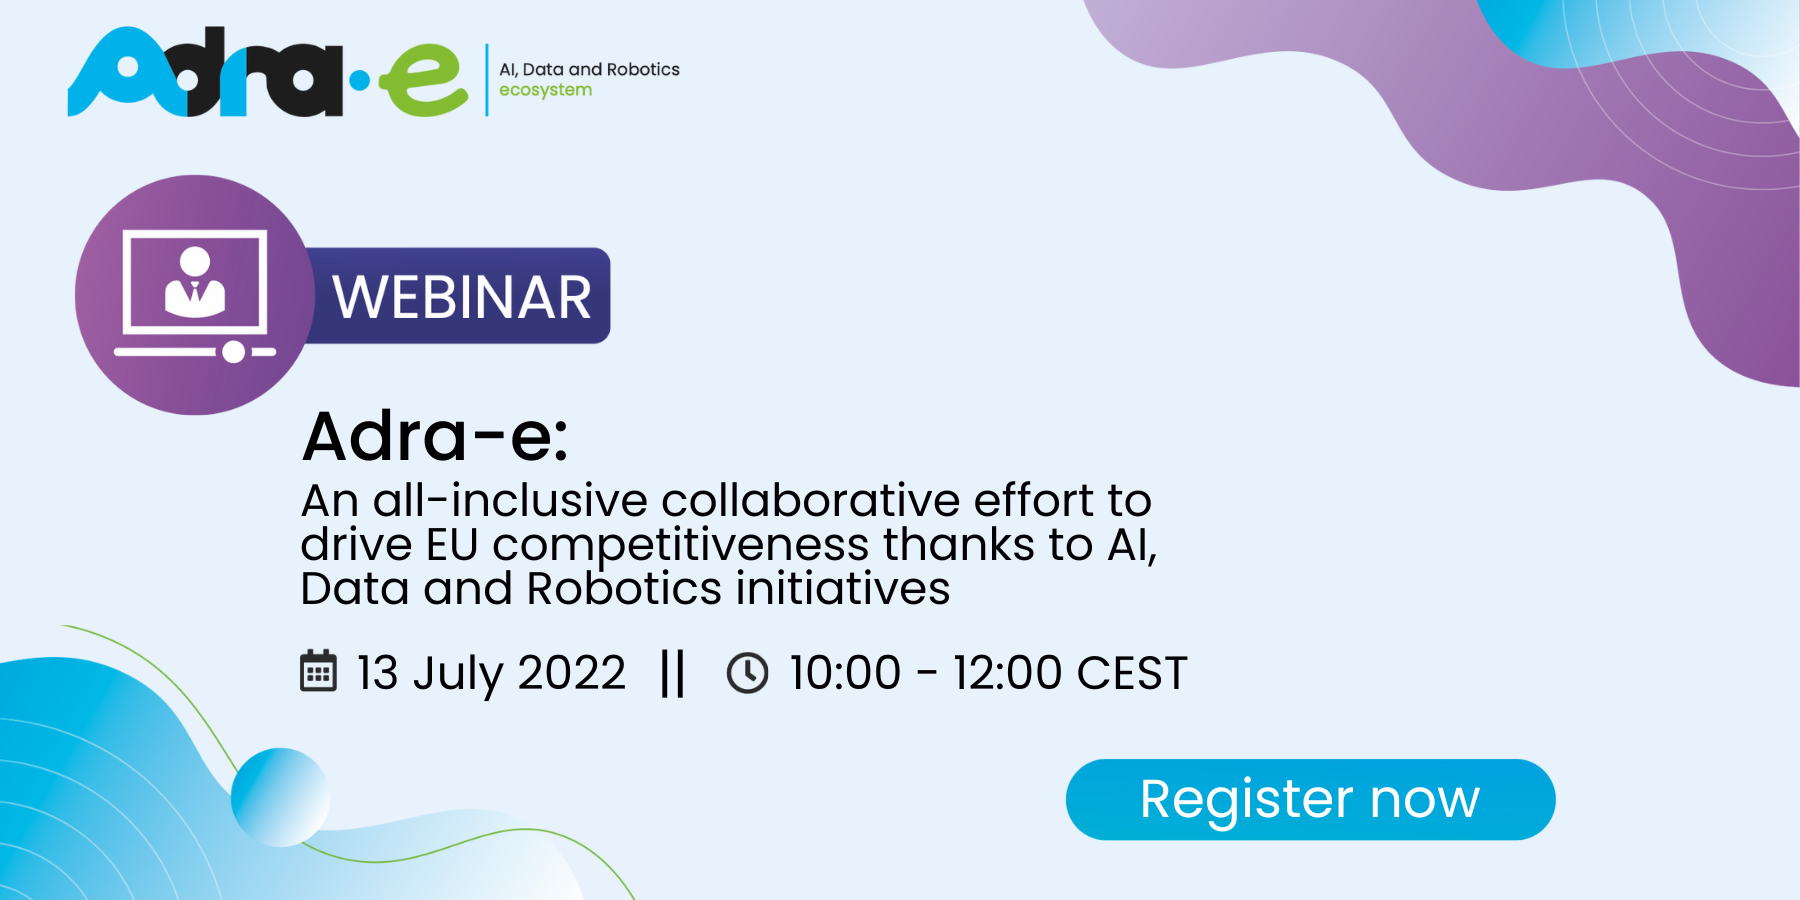 Adra-e - An all-inclusive collaborative effort to drive EU competitiveness thanks to AI, Data and Robotics initiatives